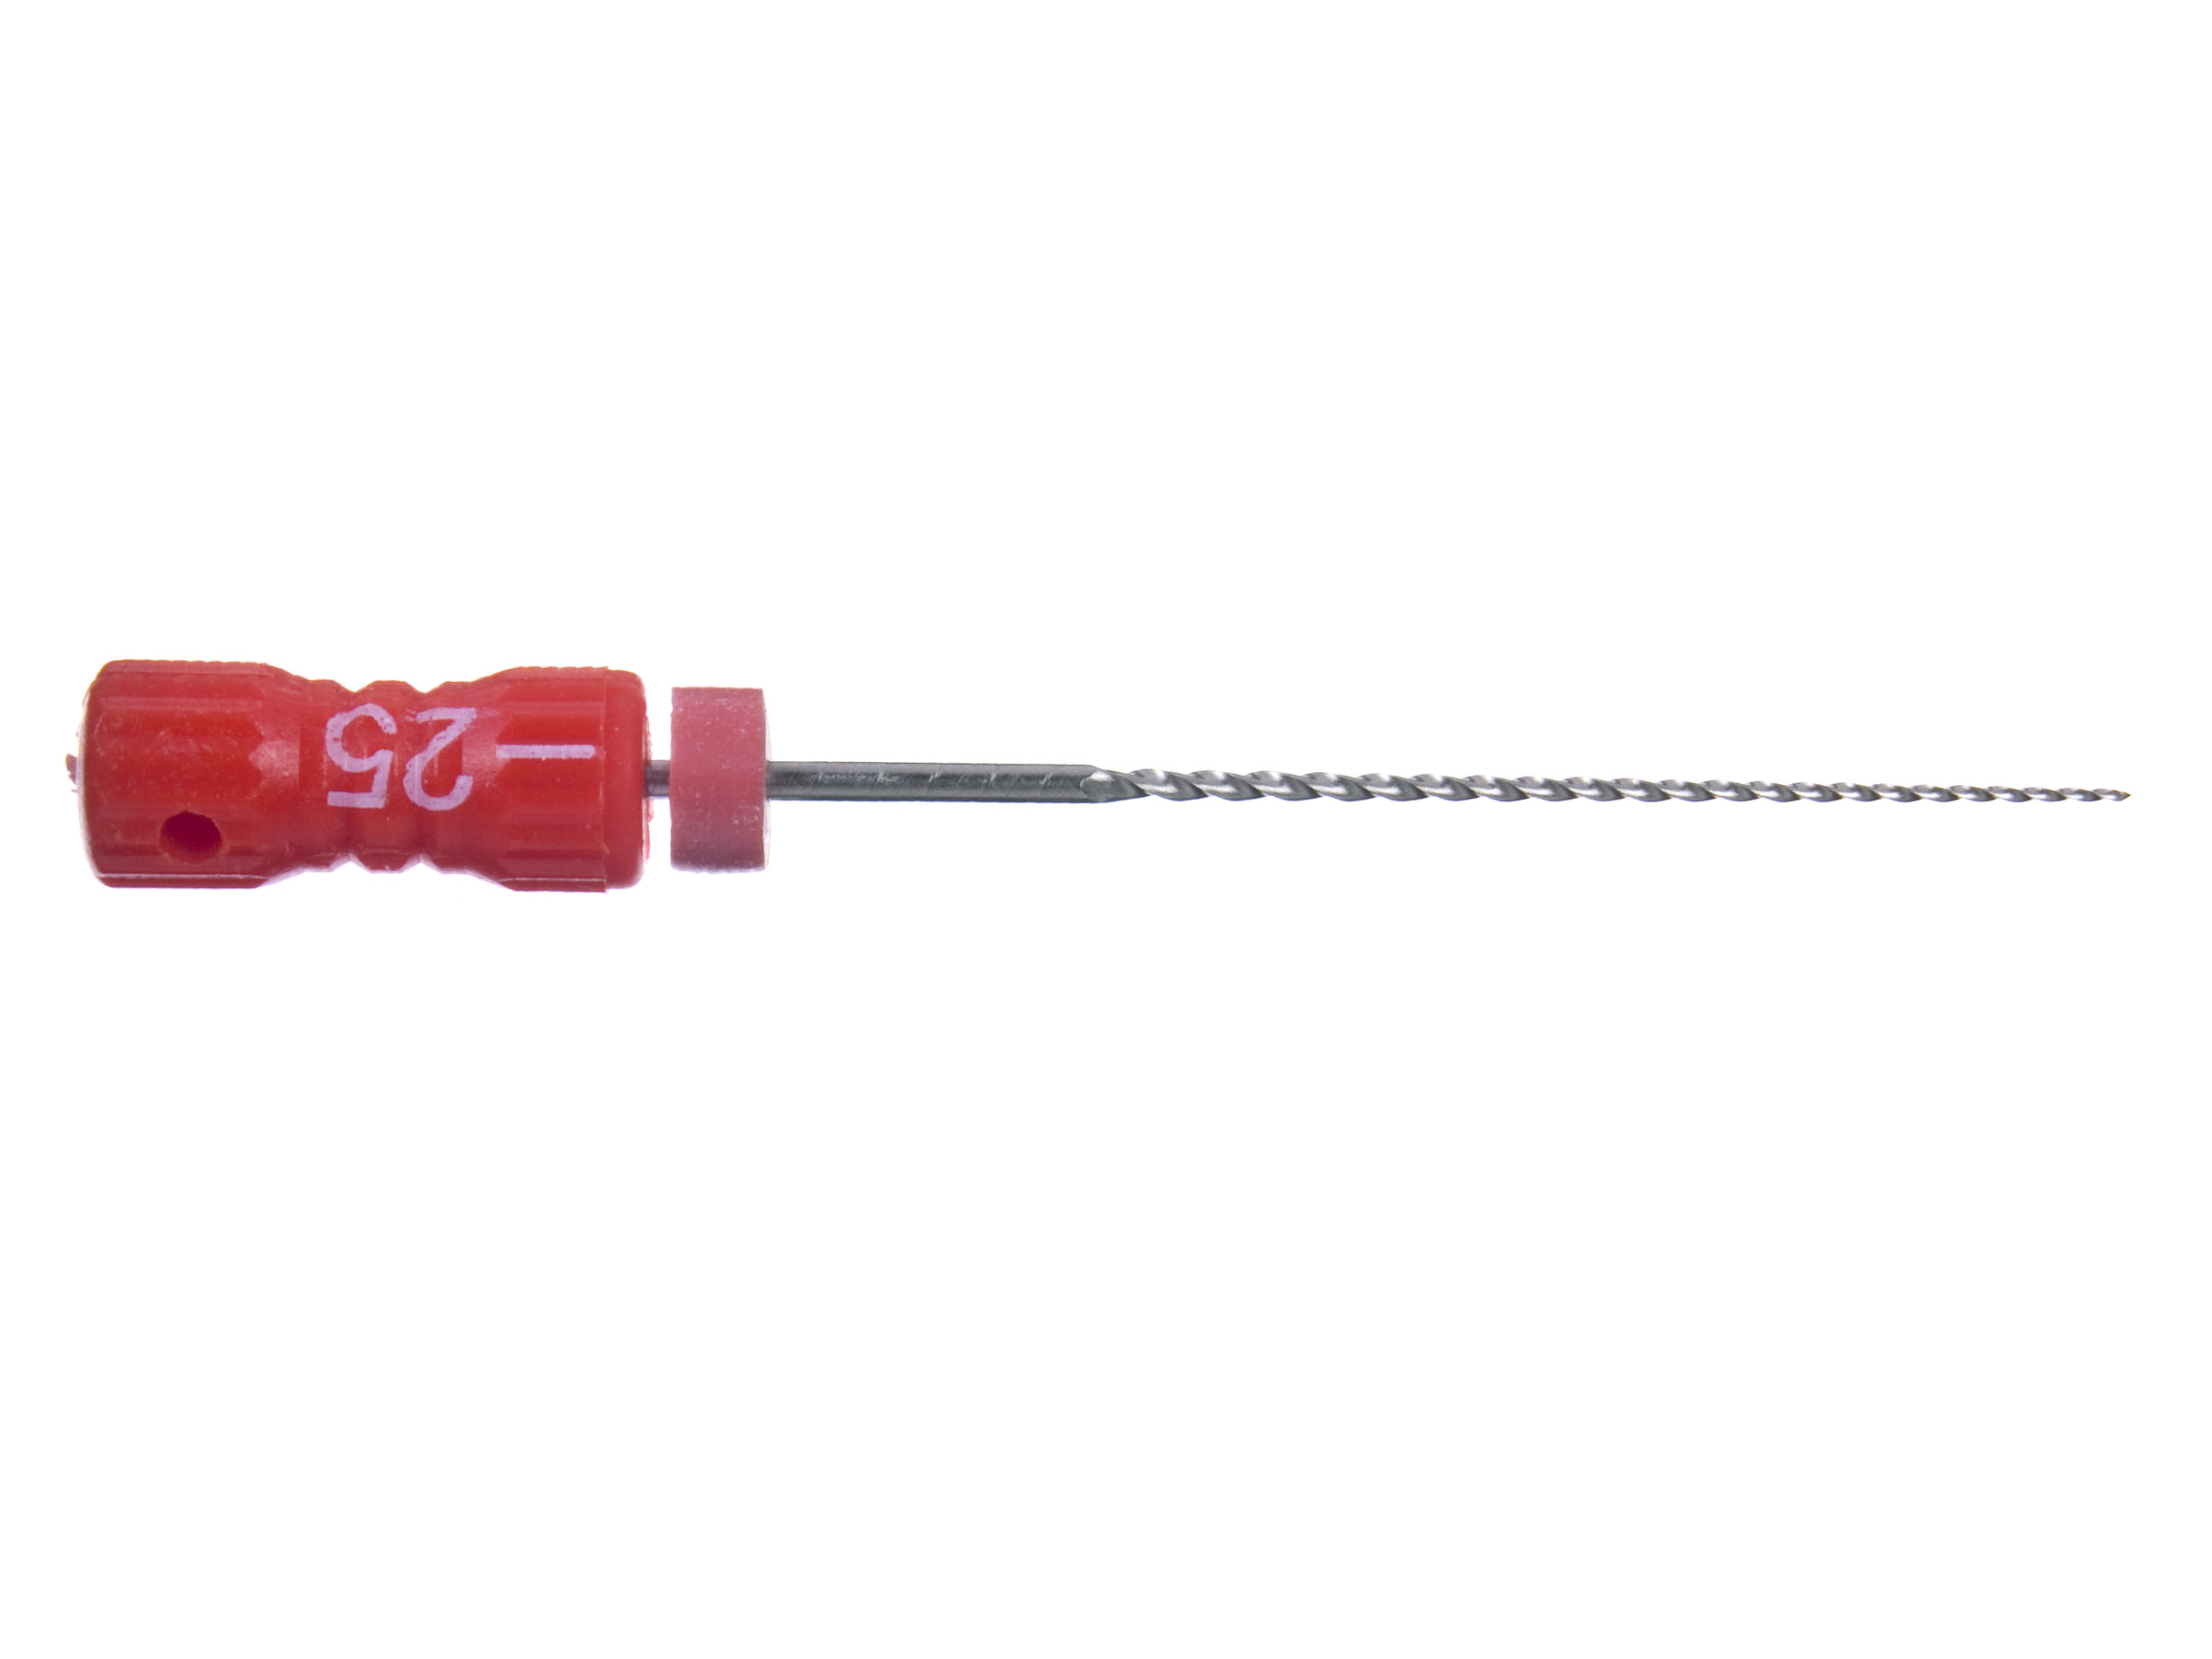 Helifile n25 L:21 mm Handle 09 ISO - инструменты эндодонтические